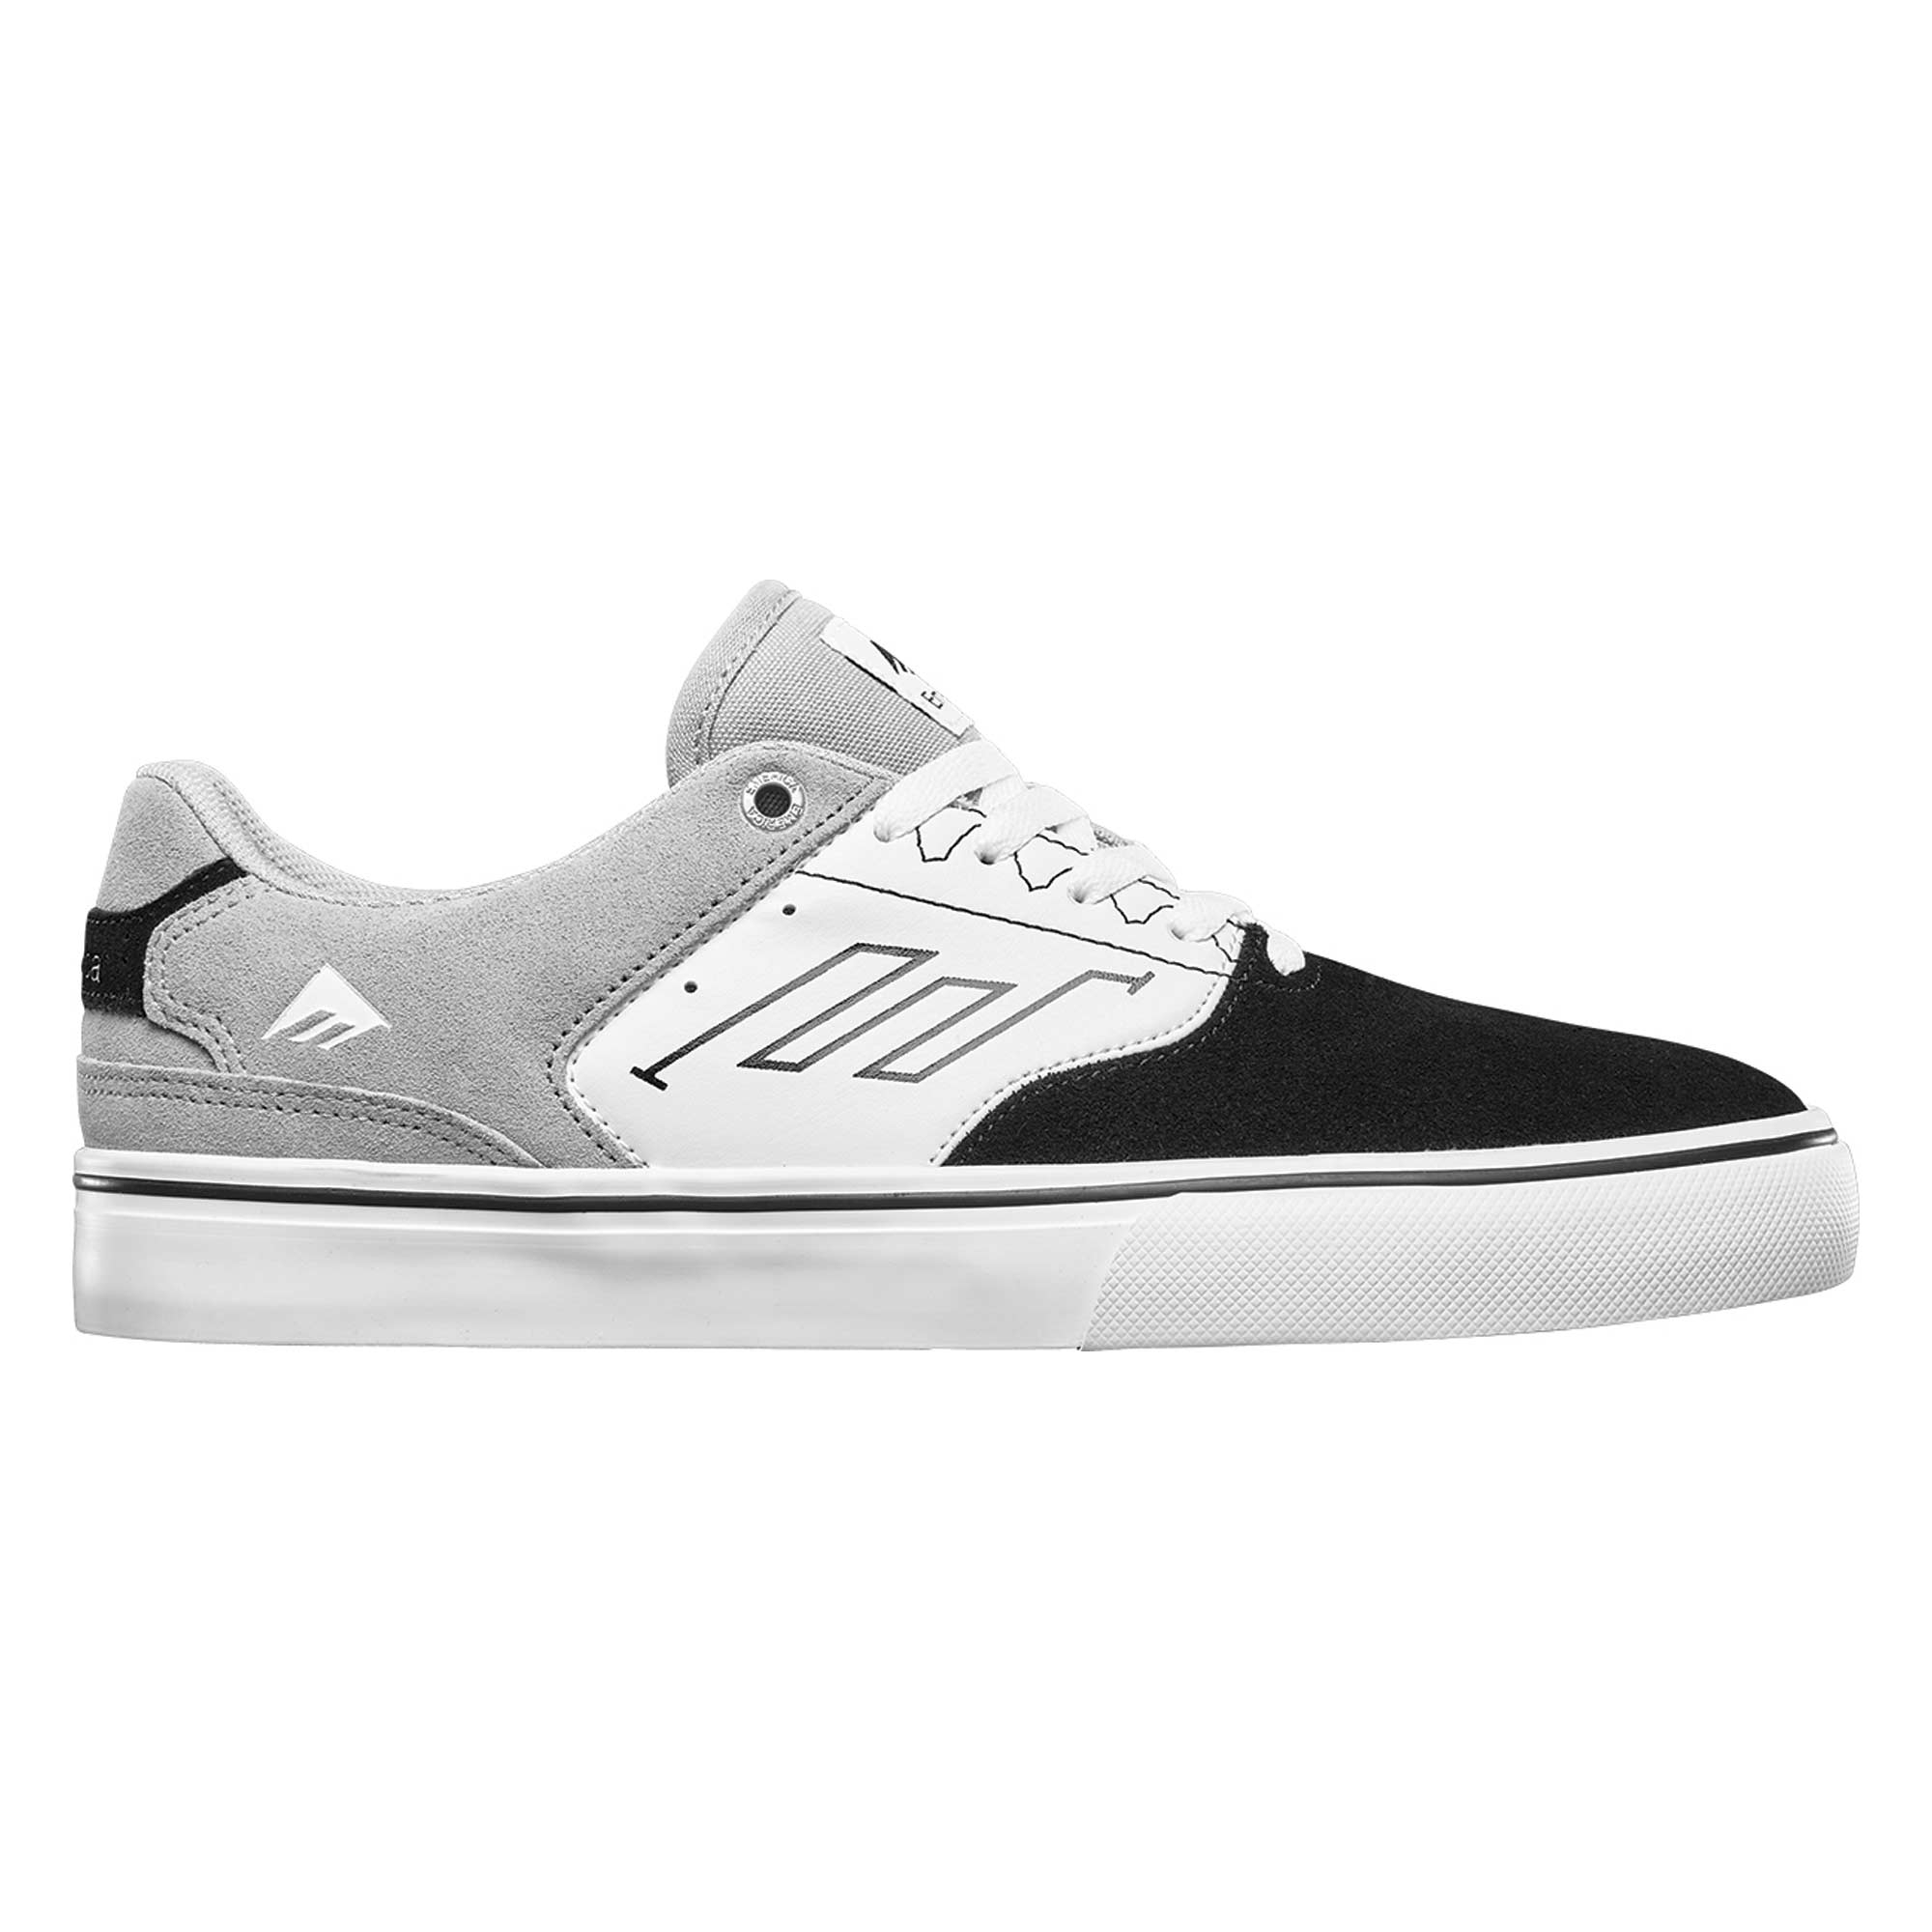 EMERICA Shoe THE LOW VULC bla/whi/gry black/white/grey